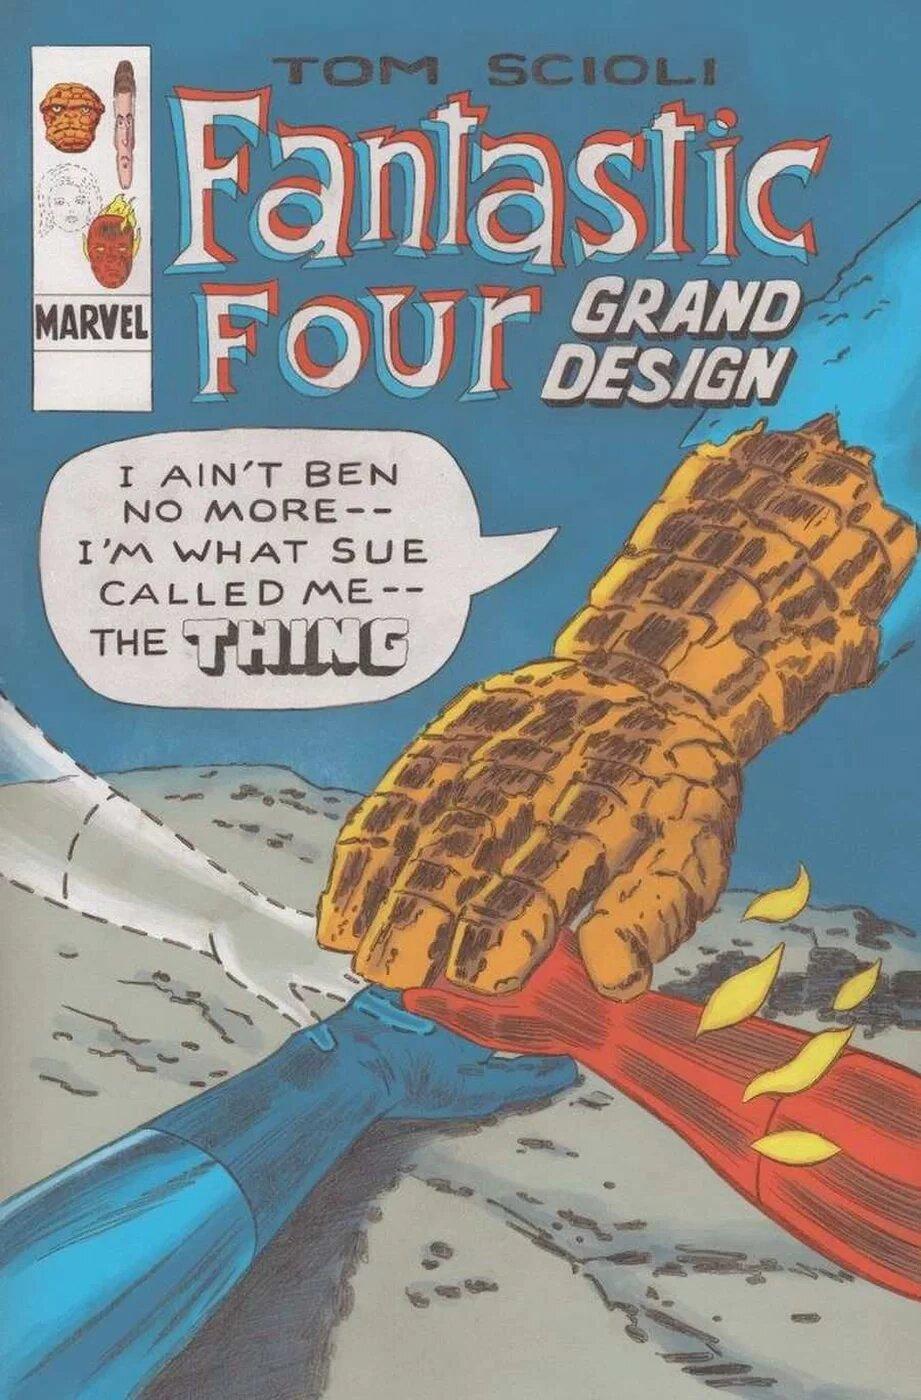 Fantastic Four: Grand Design Vol. 1 #1